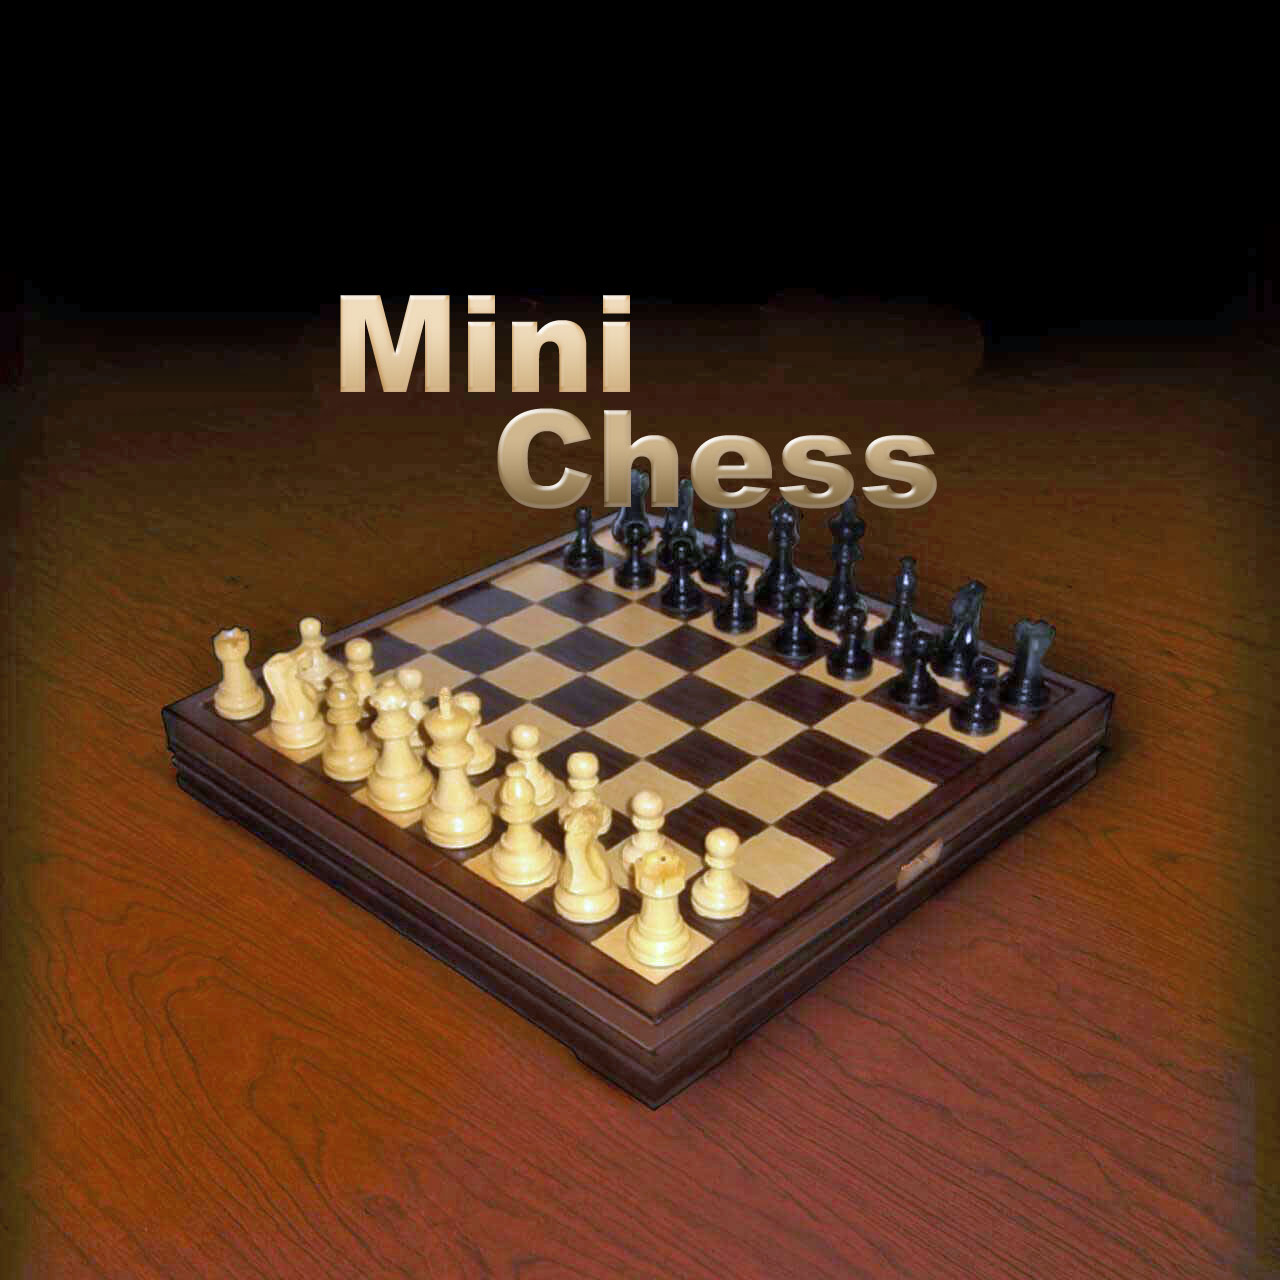 play chess free